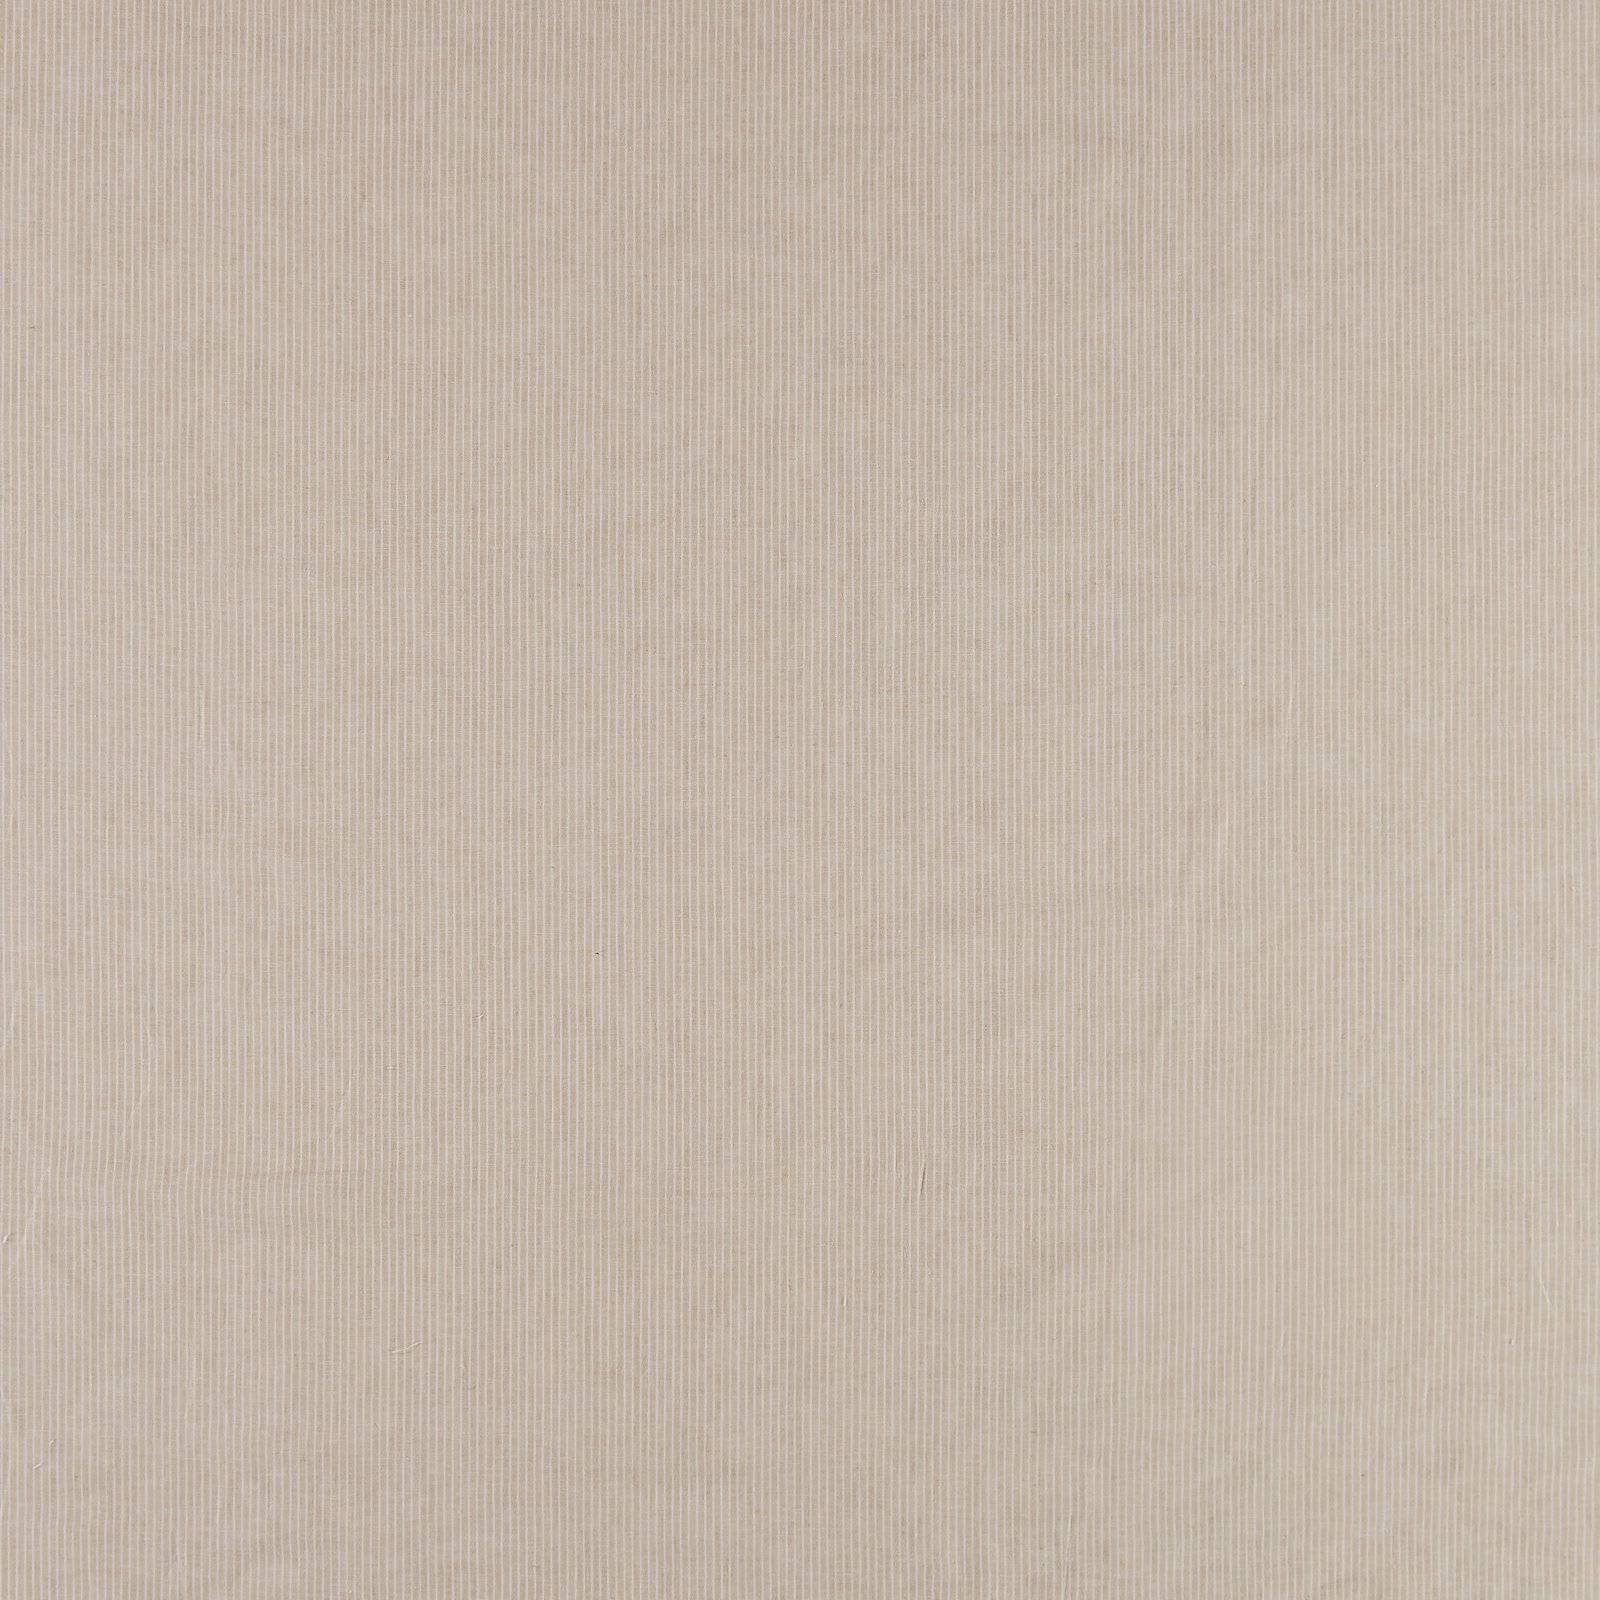 Linen/cotton YD stripe sand/white 410187_pack_sp